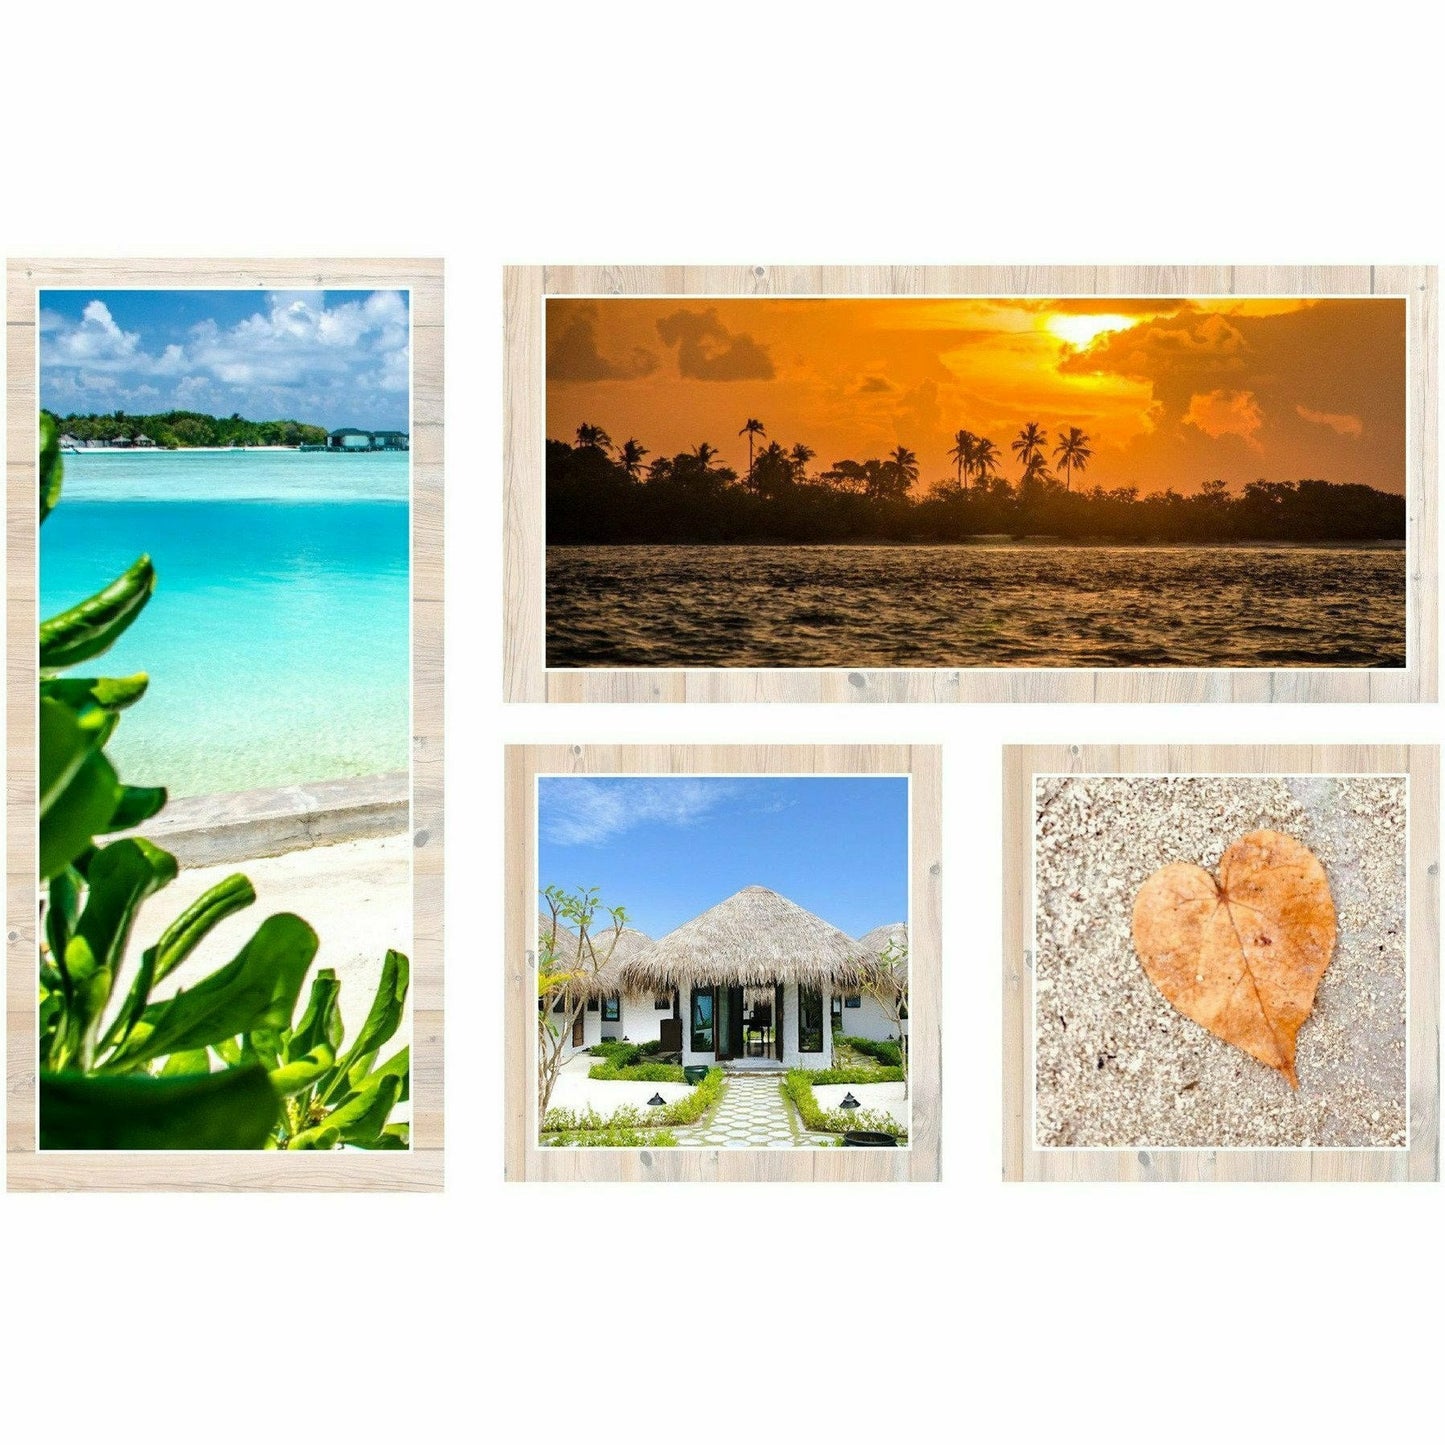 Hudhuranfushi Surf Resort - Beach Villas | 7 Nights